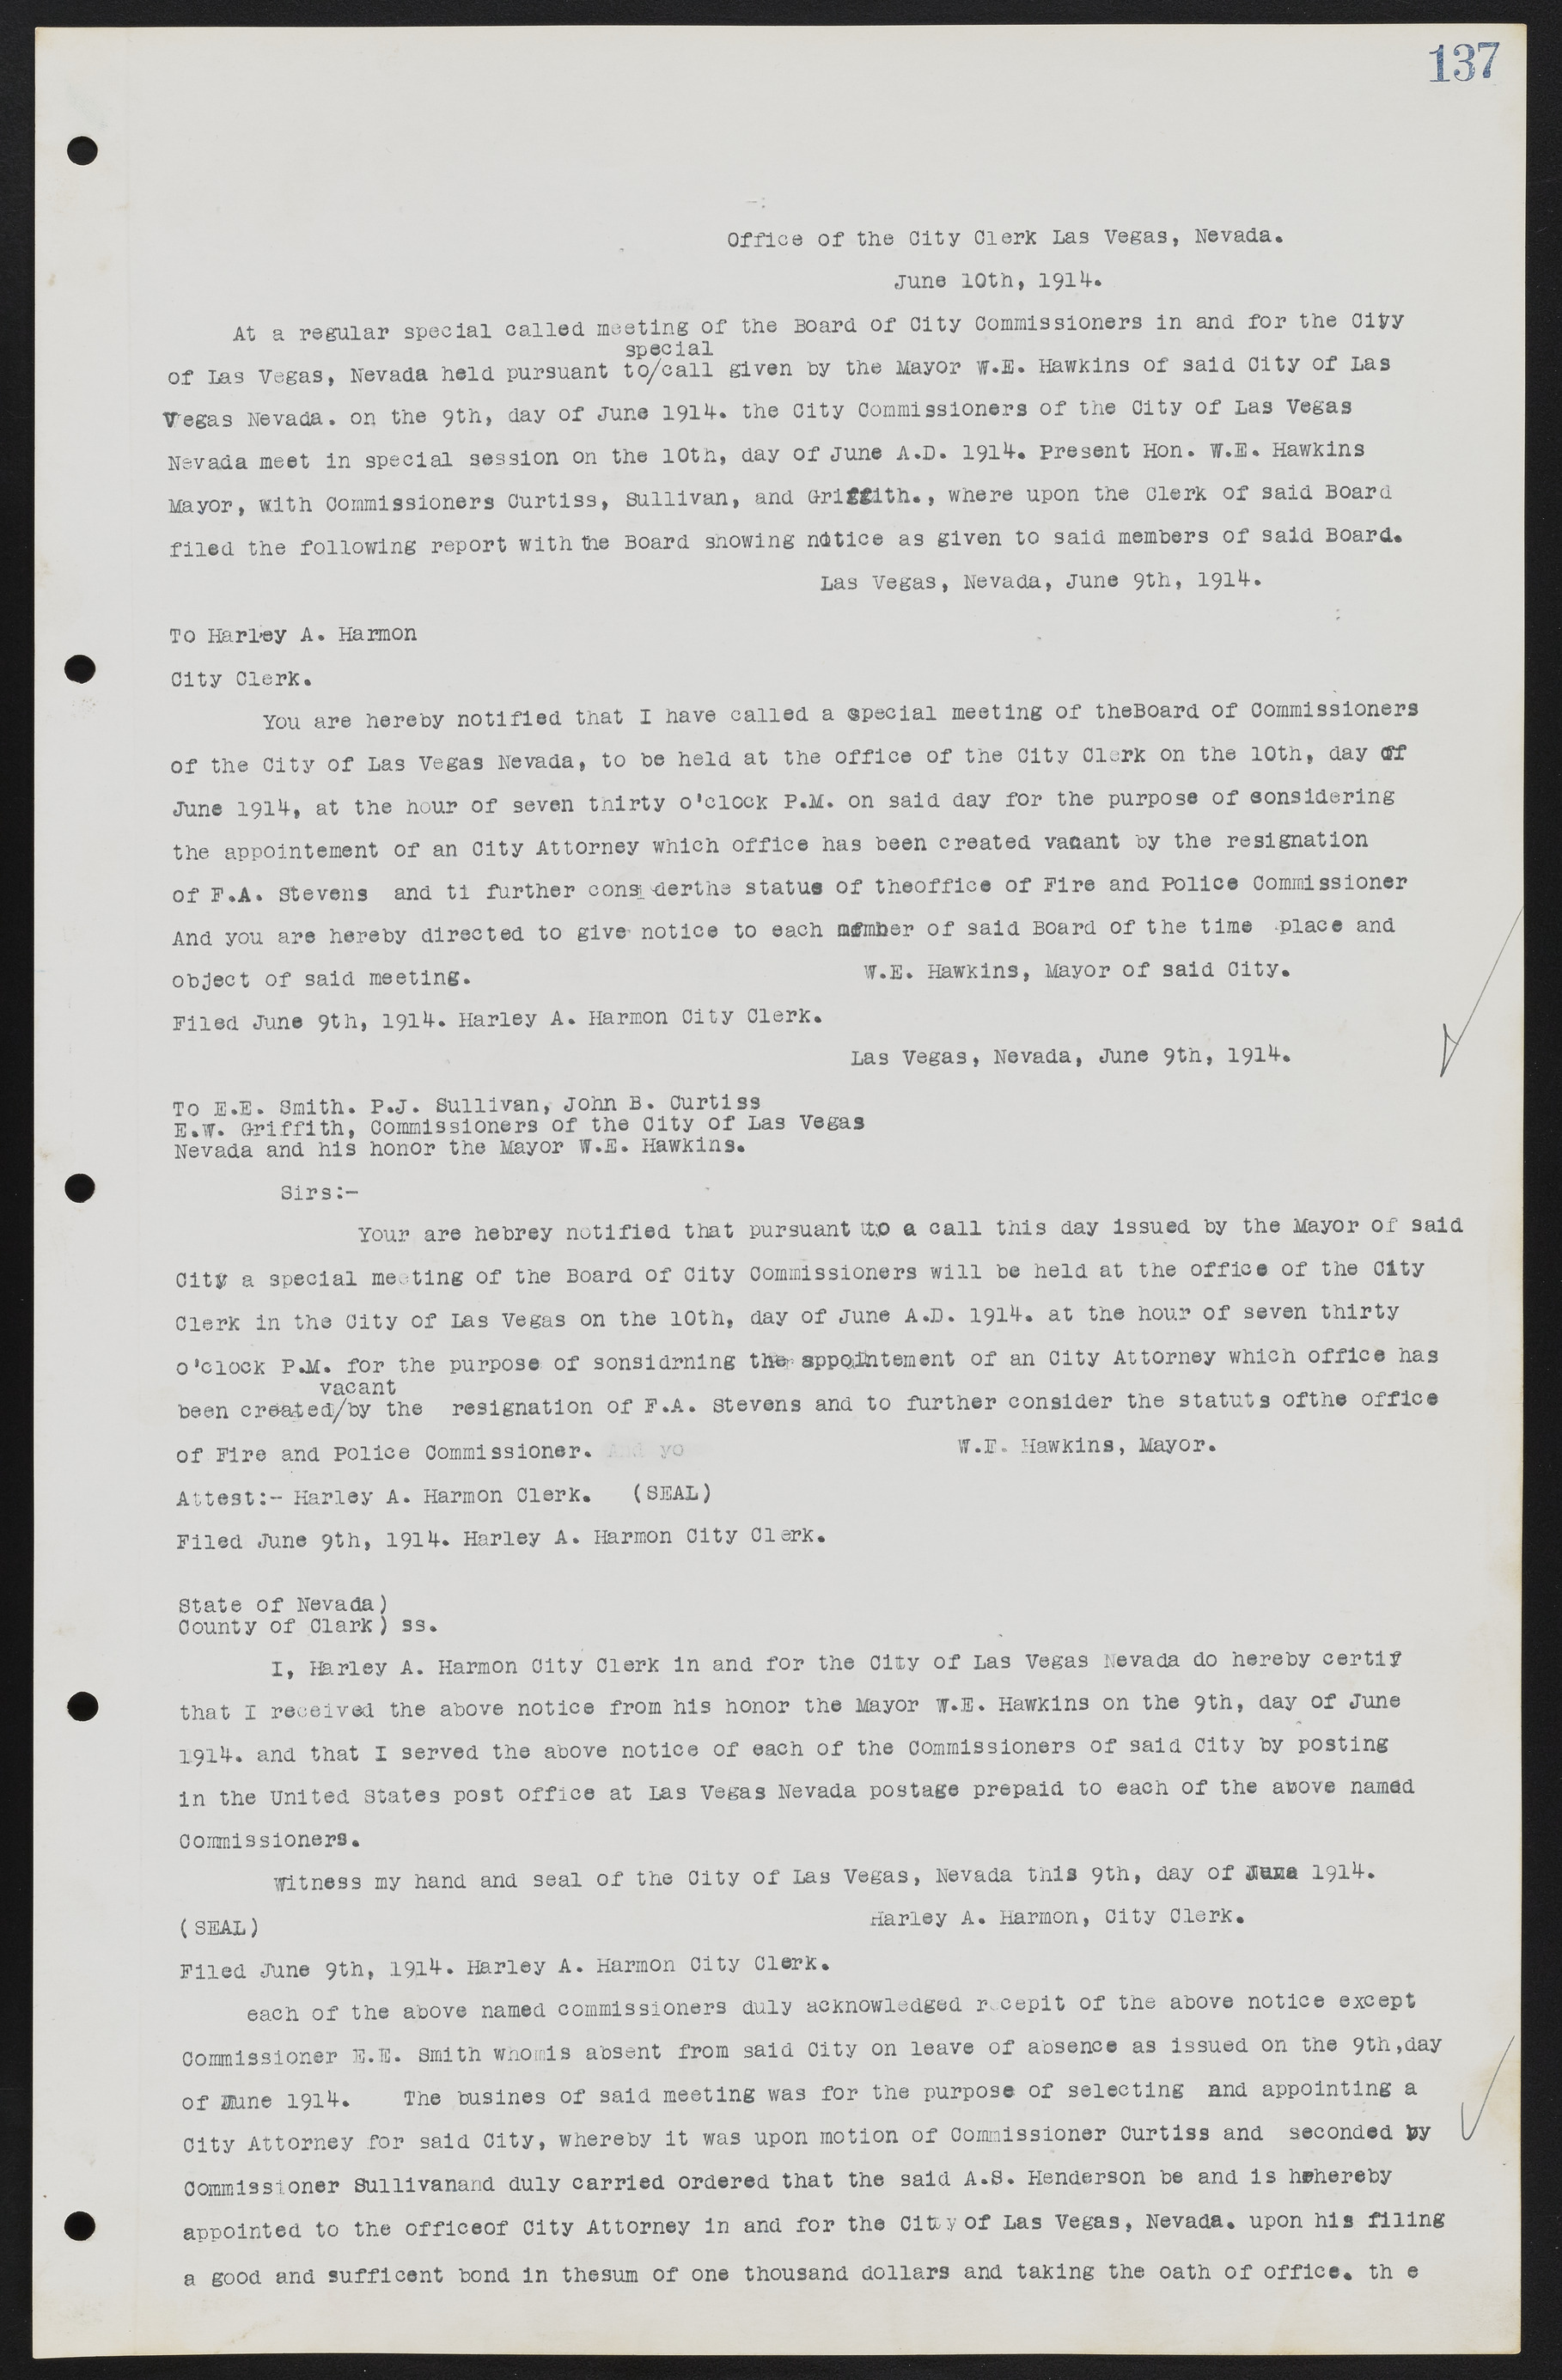 Las Vegas City Commission Minutes, June 22, 1911 to February 7, 1922, lvc000001-151